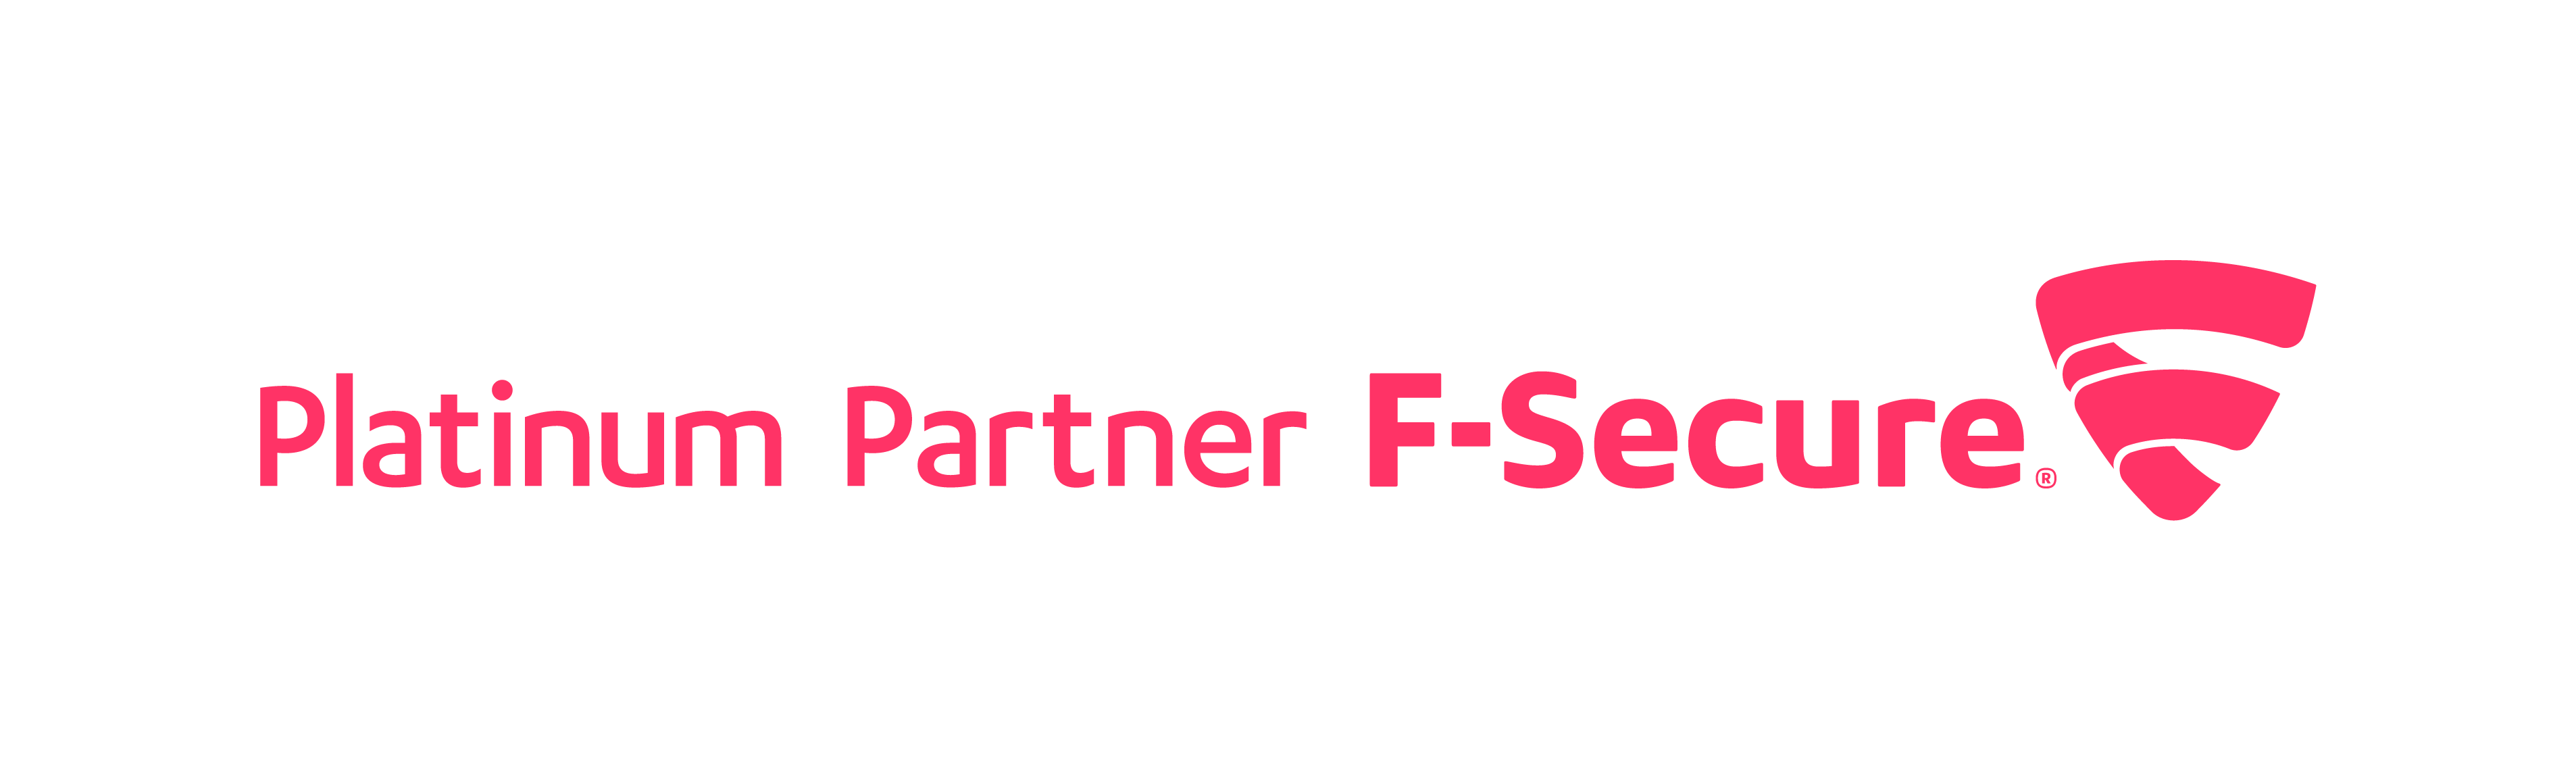 F-Secure Platinum Partner